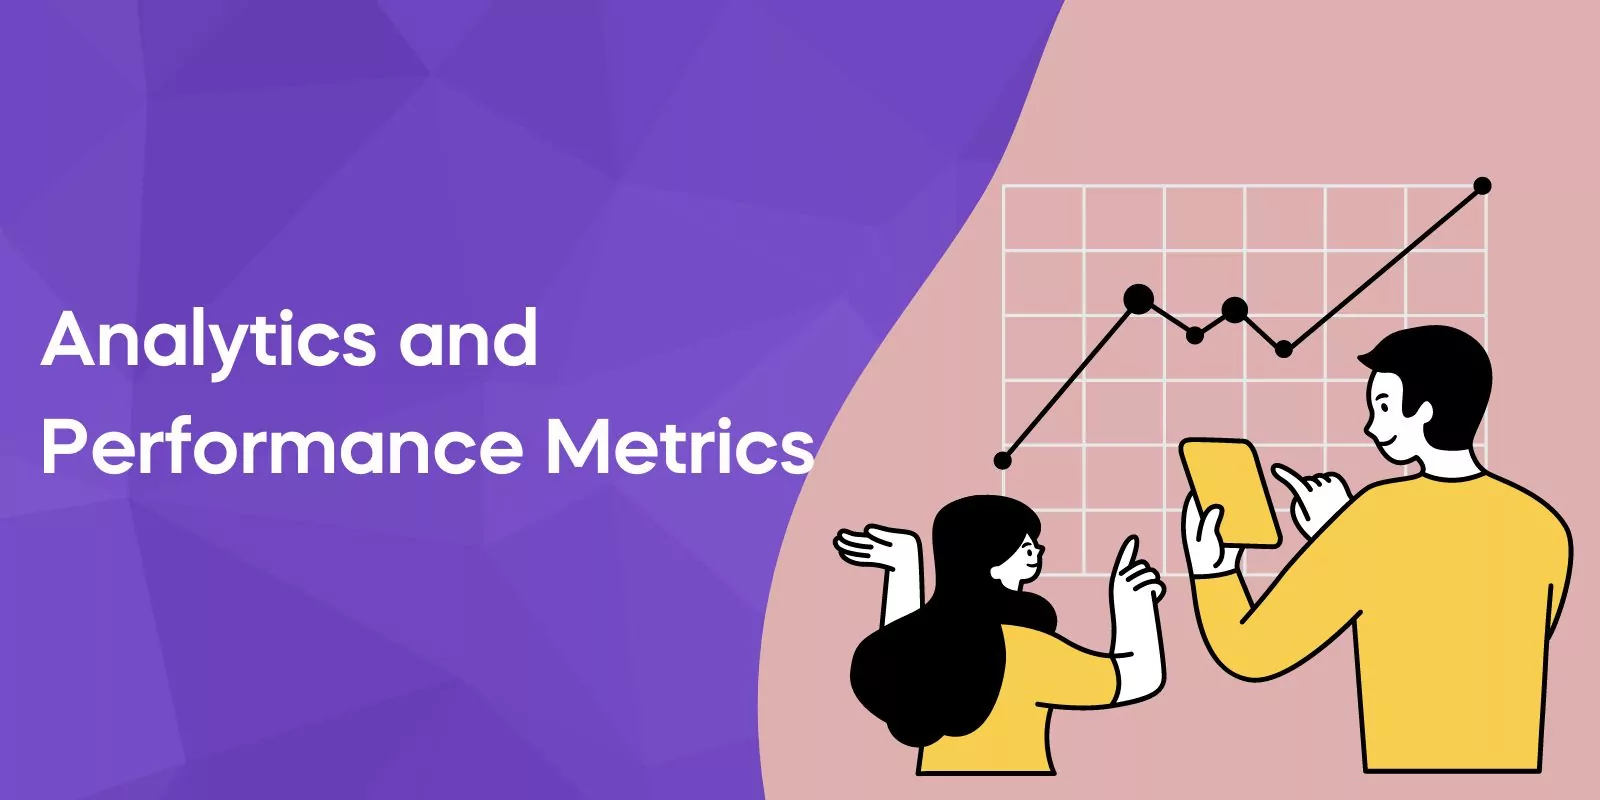 Analytics and Performance Metrics